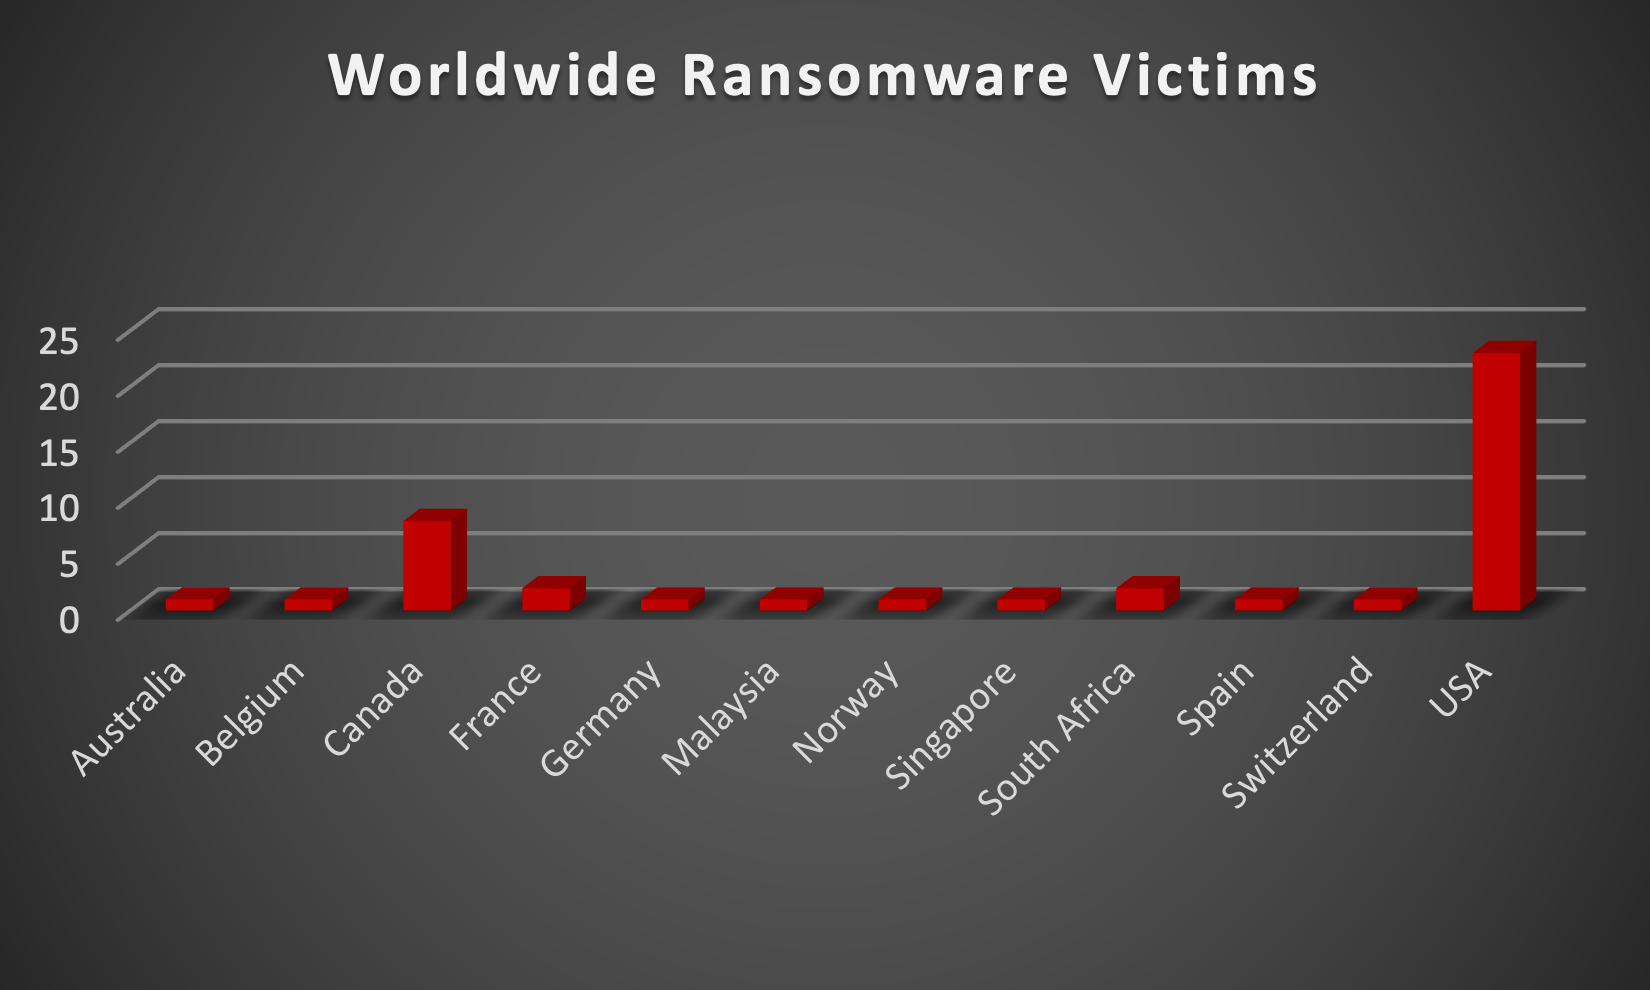 Worldwide Ransomware Victims